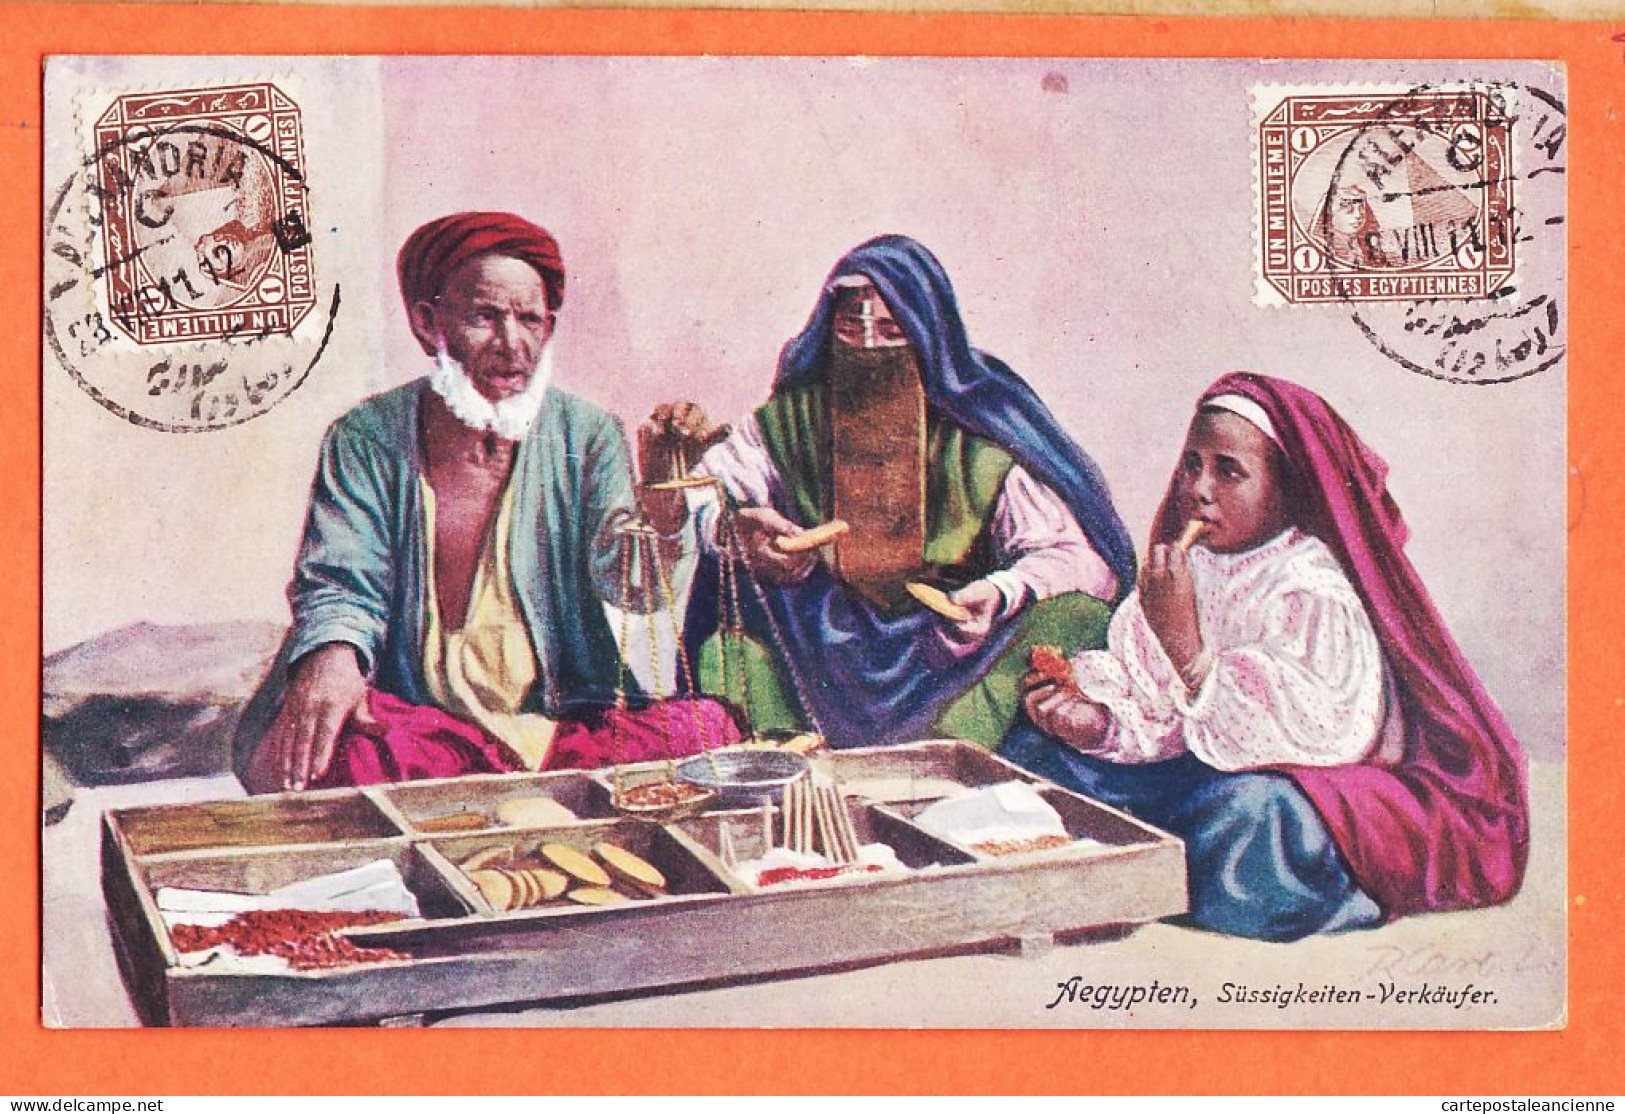 38955 / ⭐ AEGYPTEN Süssigkeiten Verkaufer ◉ EGYPTE Vendeur Friandises 1911 à Jeanne LEVECQUE Nanterre ◉ WANDERER 1336 - Persone